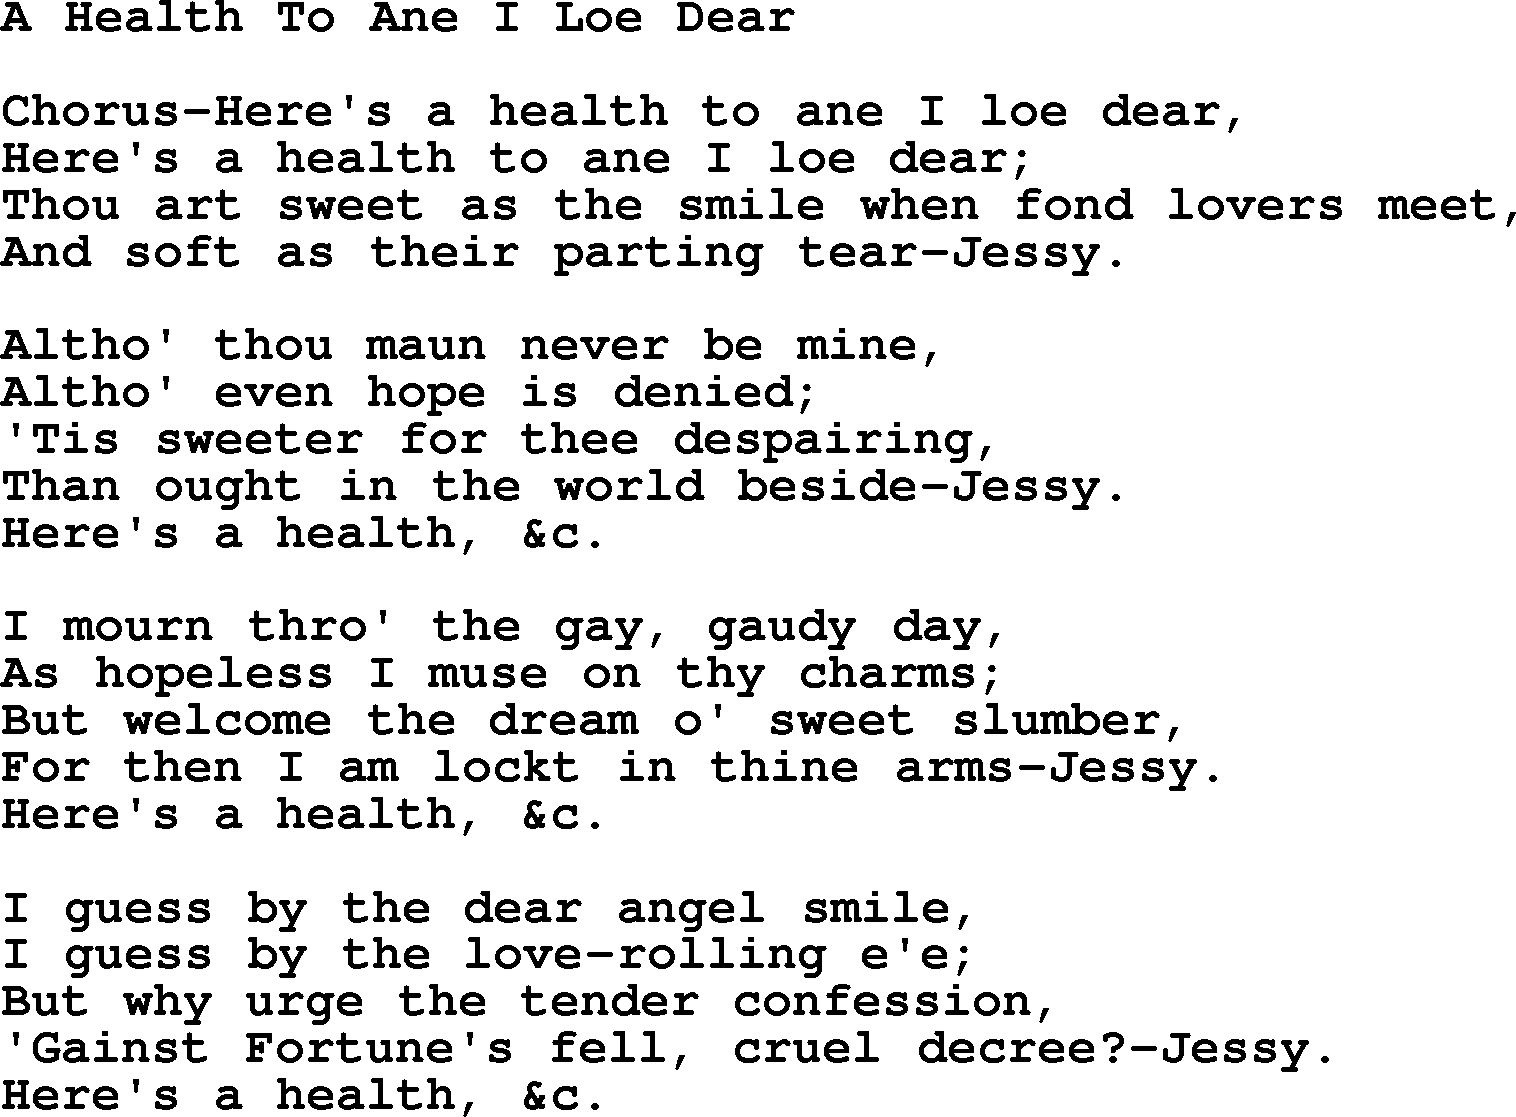 Robert Burns Songs & Lyrics: A Health To Ane I Loe Dear